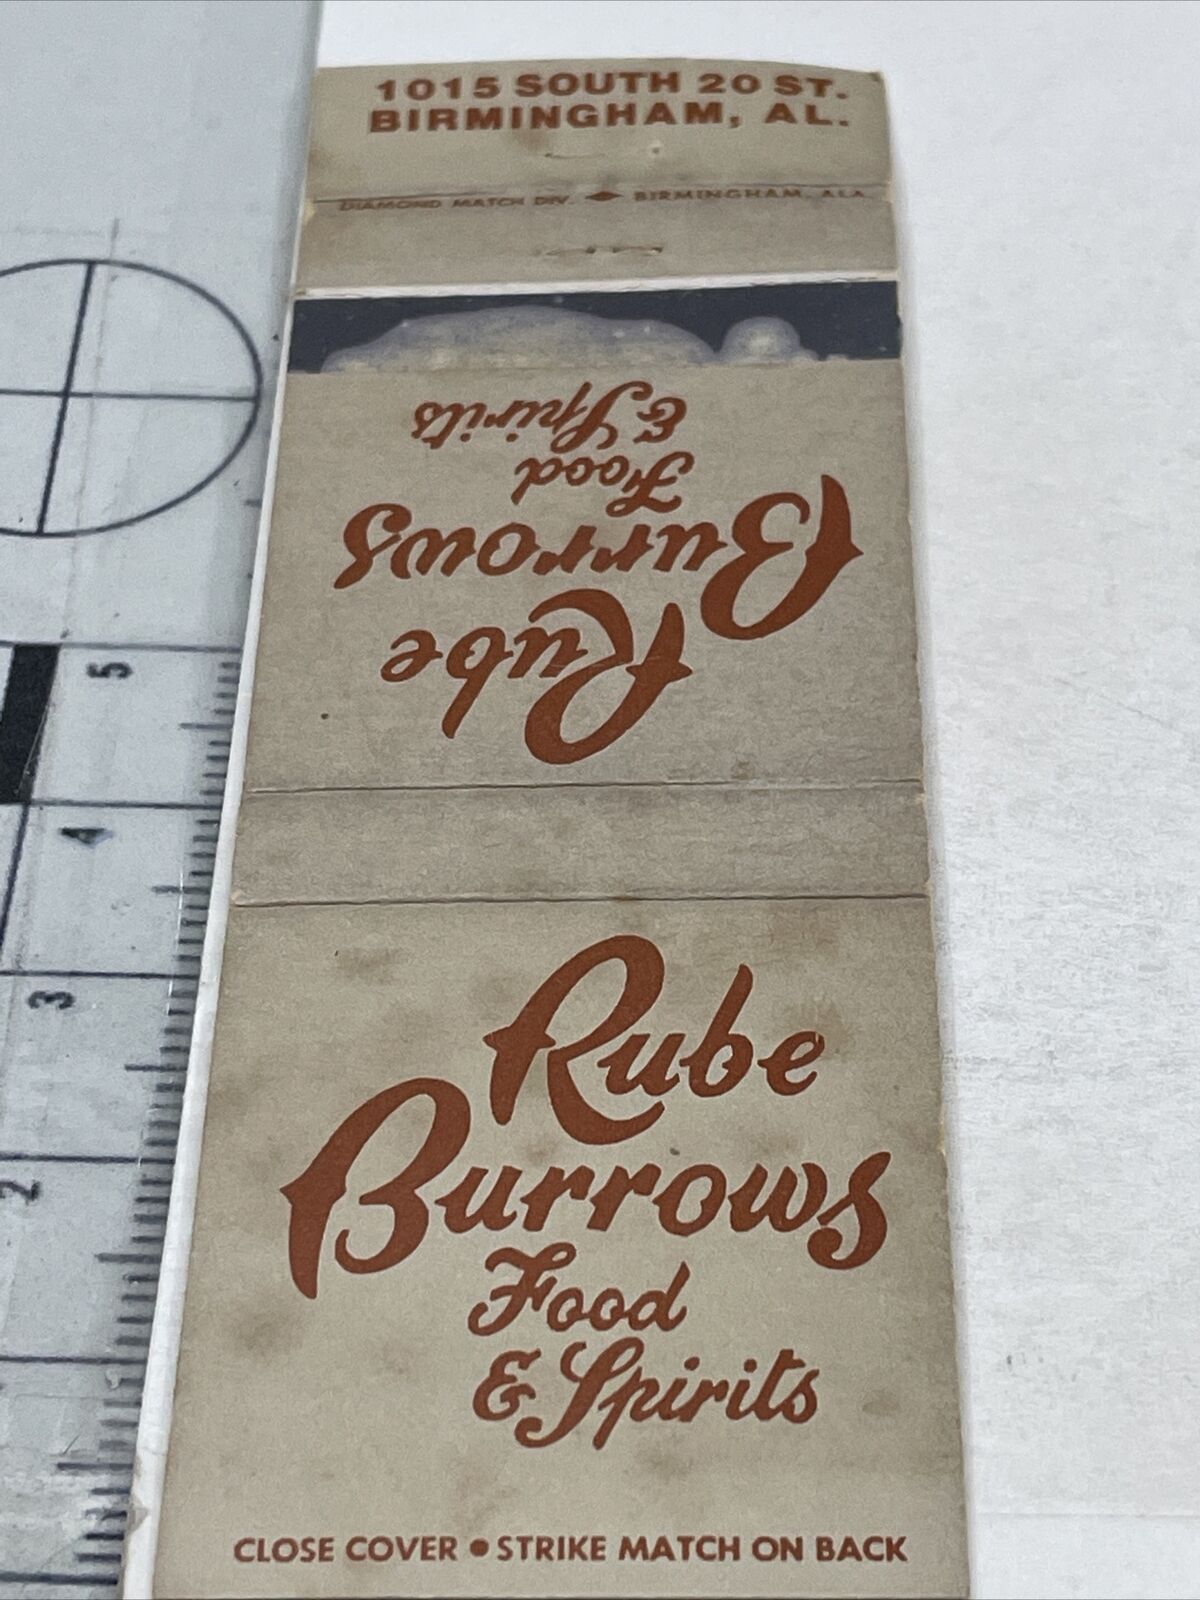 Vintage Matchbook Cover  Rube Burrows Food & Spirits  Birmingham, AL  gmg Foxing